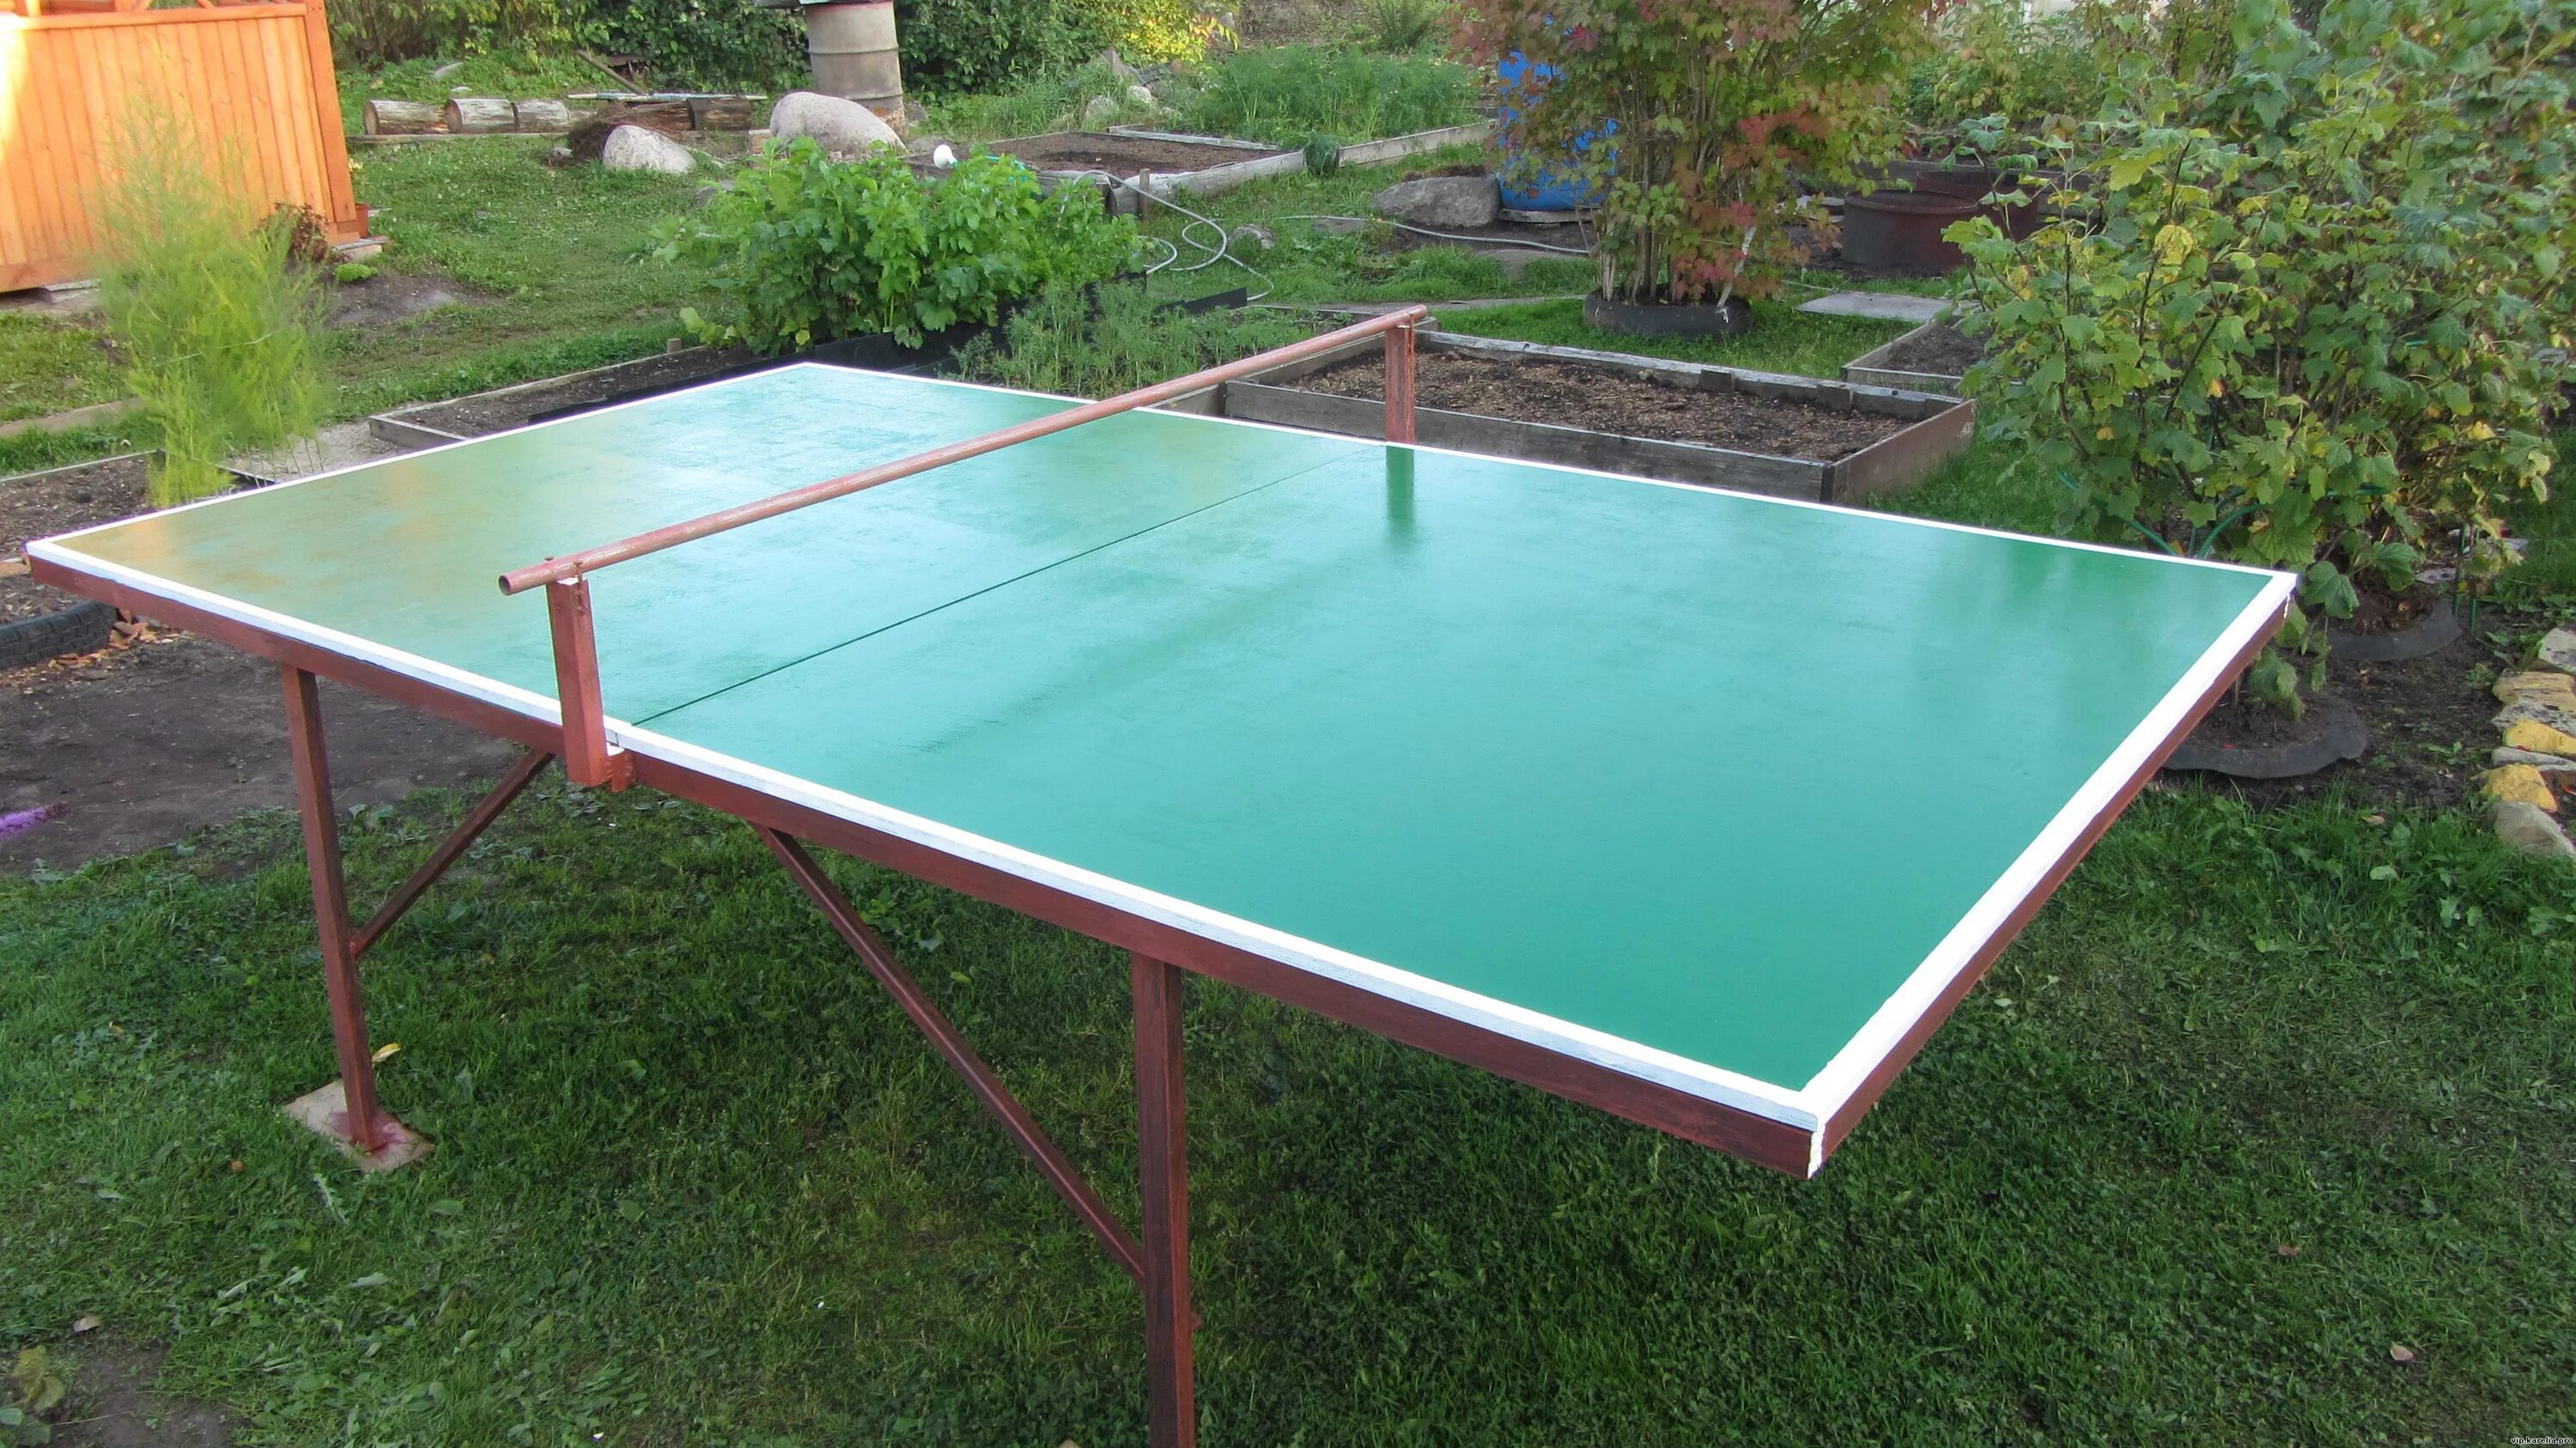 Теннисный стол "winner s400". Теннисный стол Donic Table Persson 25 Green. Теннисный стол 1926. Самодельный теннисный стол. Покрытие теннисного стола